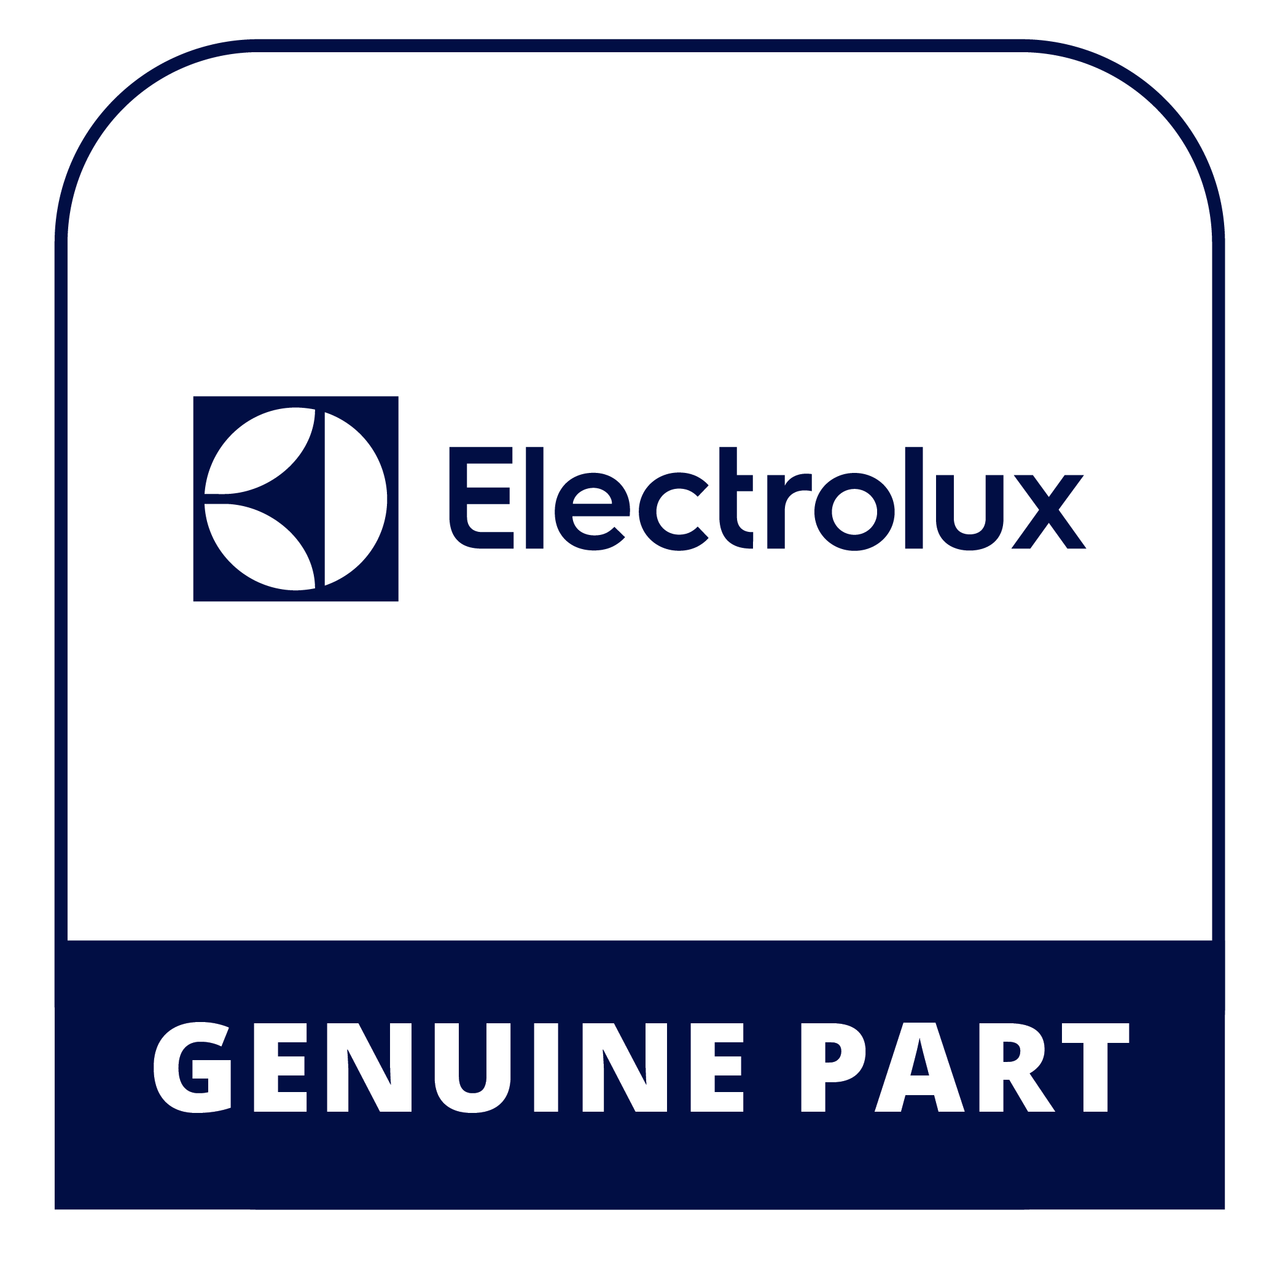 Frigidaire - Electrolux 154367701 - Check Valve - Genuine Electrolux Part